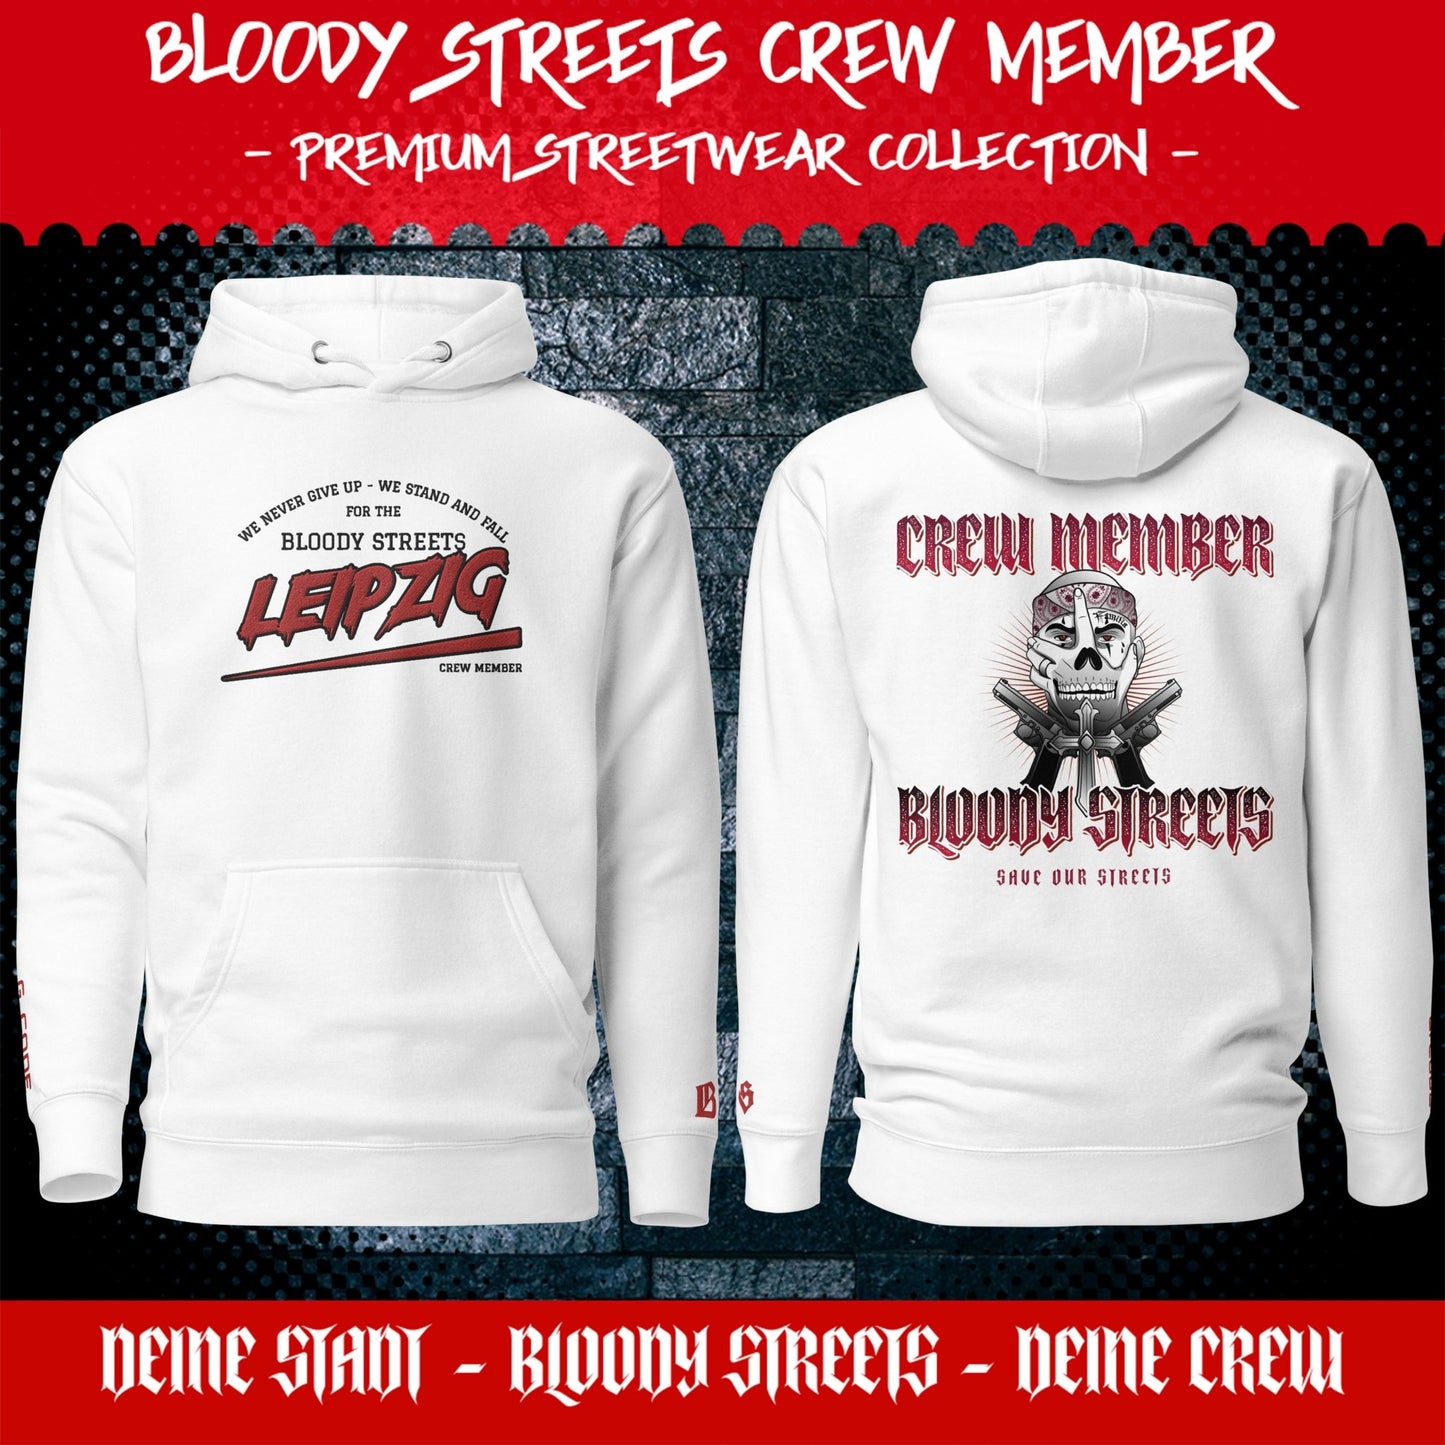 BS CITY Leipzig Crew Member Premium Red "G" Hoodie - BLOODY-STREETS.DE Streetwear Herren und Damen Hoodies, T-Shirts, Pullis